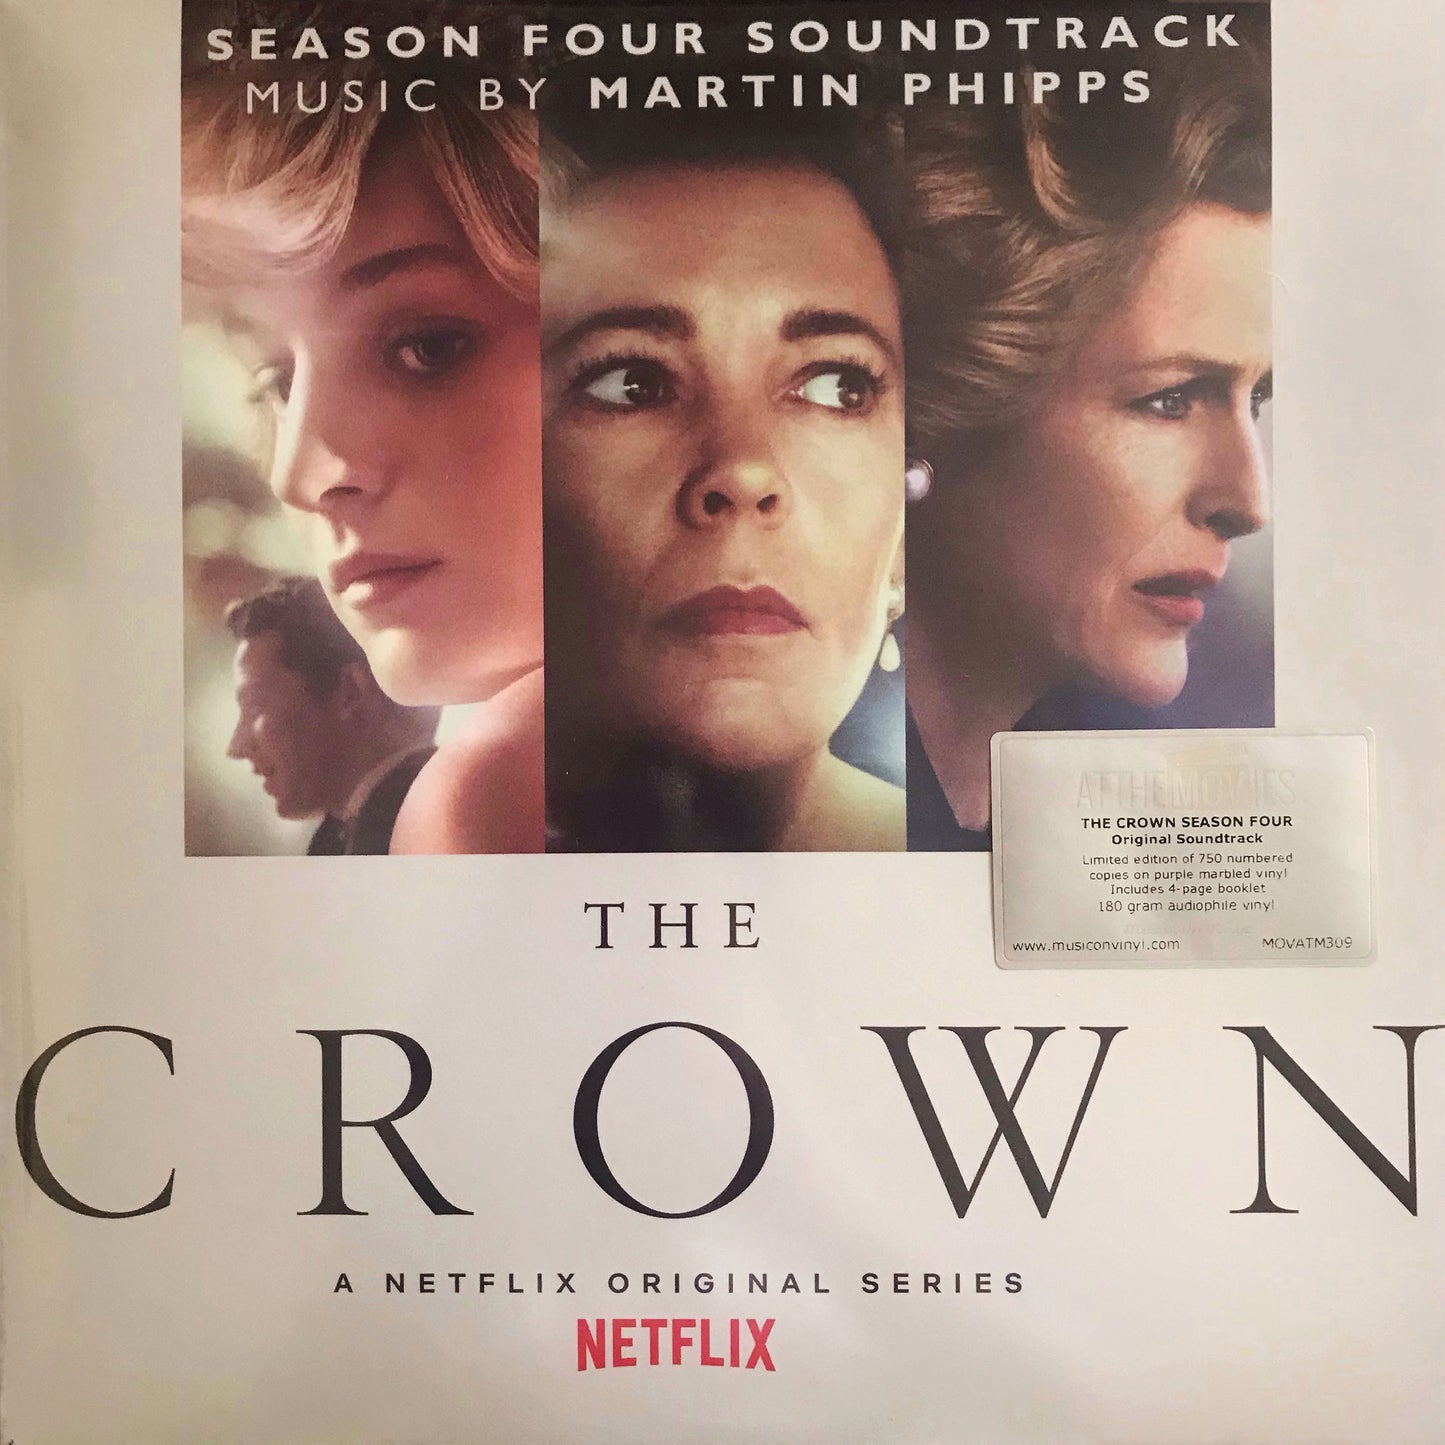 The Crown: Season 4 Original Soundtrack (Limited Edition 180g Purple Marble Vinyl)